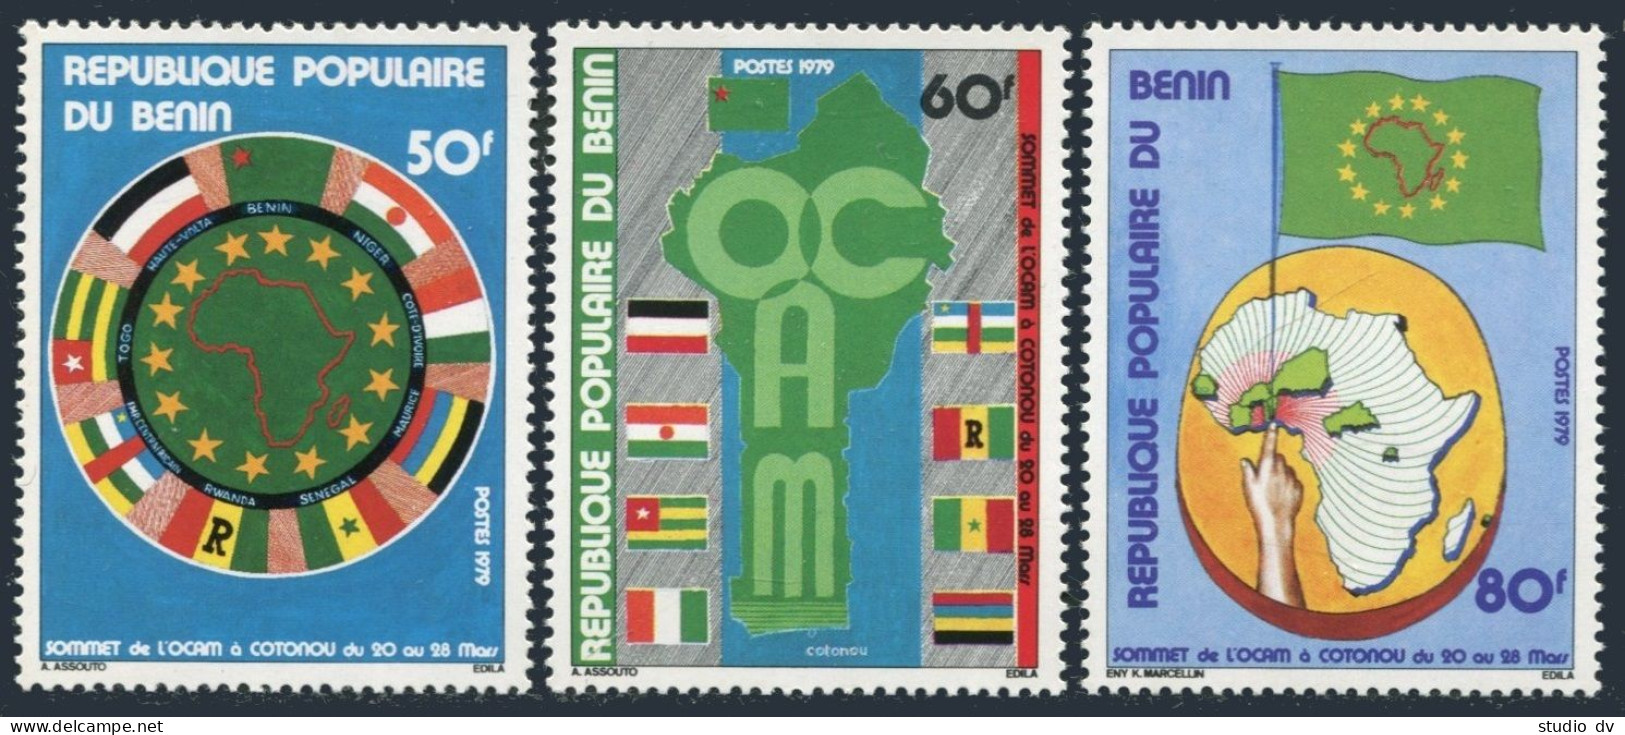 Benin 427-429, MNH. Michel 177-179. Maps Of Africa, Benin. OCAM Flag. 1979. - Benin - Dahomey (1960-...)